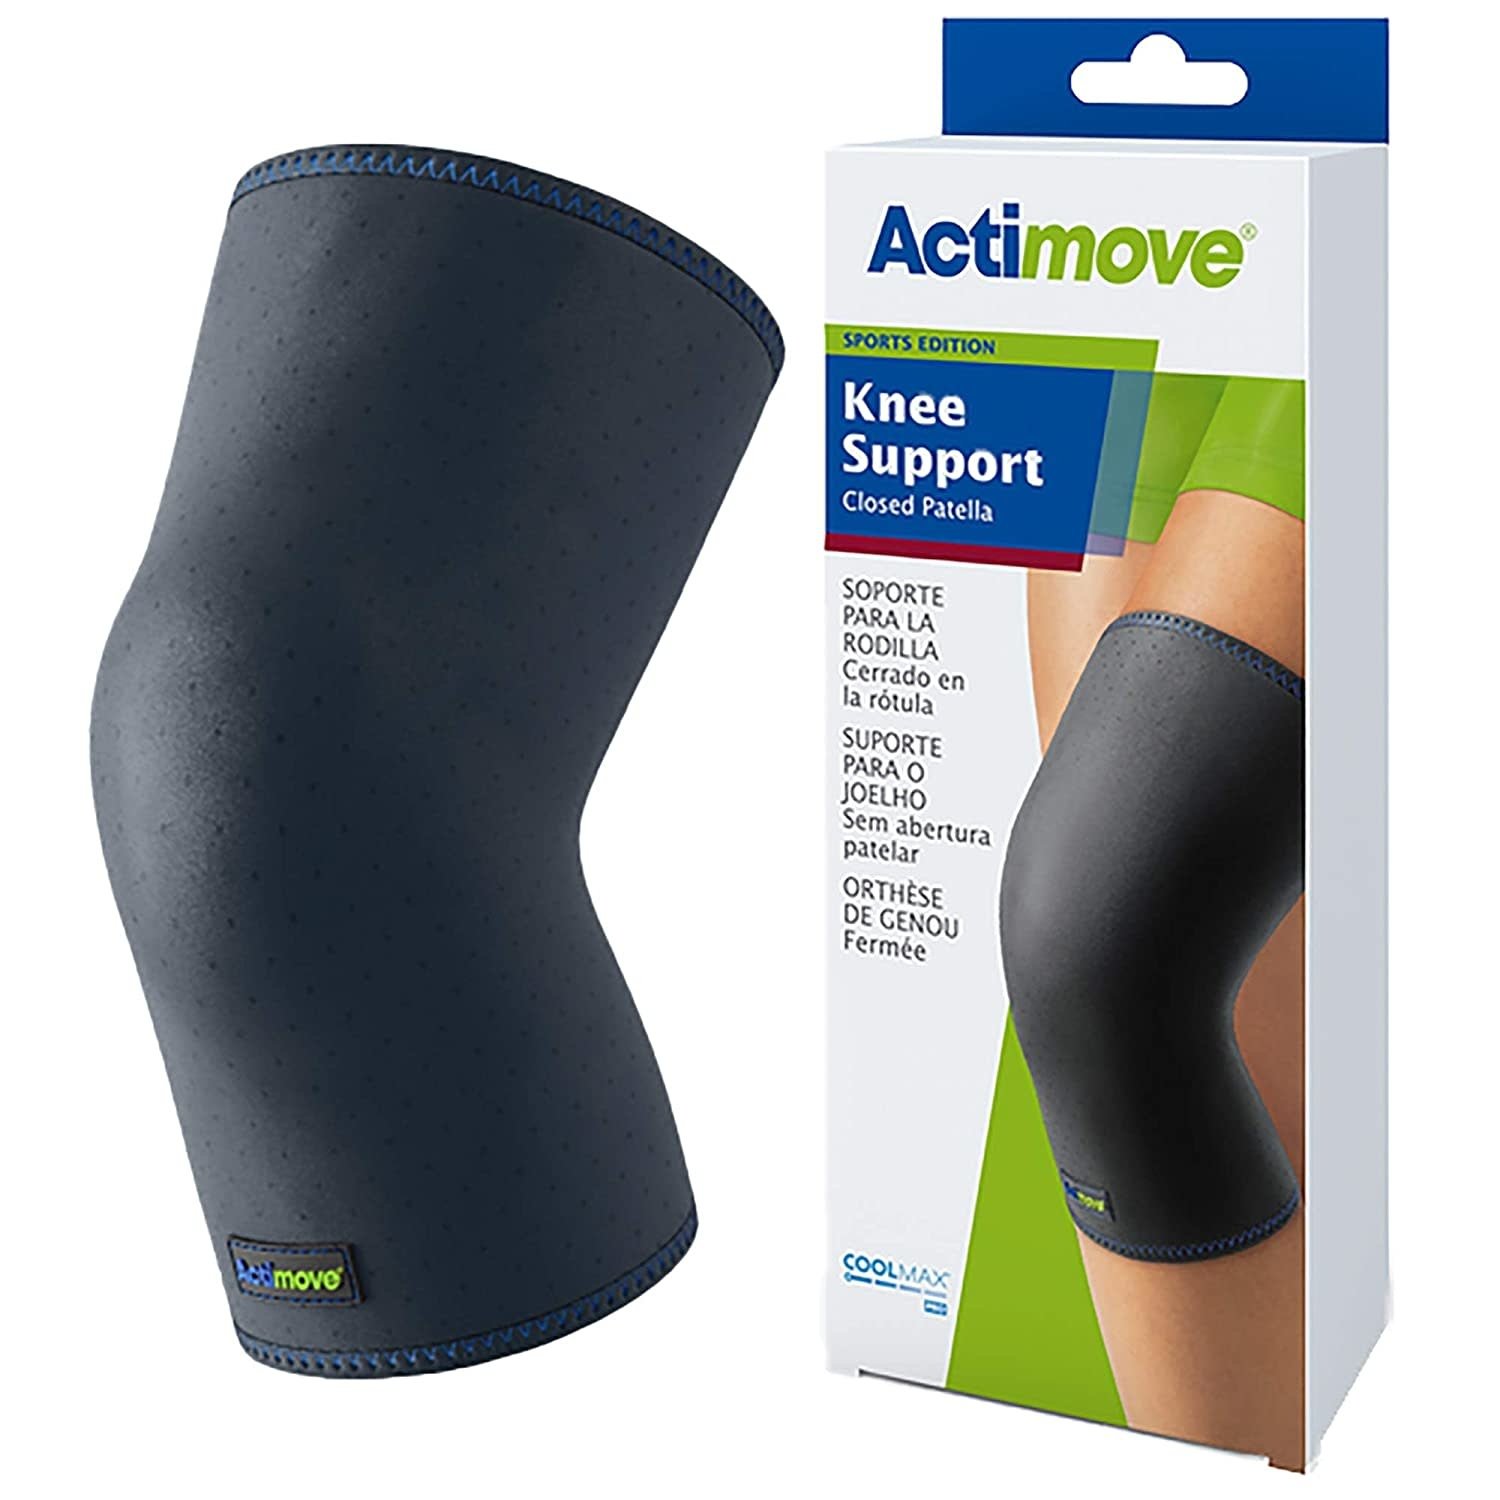 Actimove® Sports Edition Knee Support Closed & Open Patella